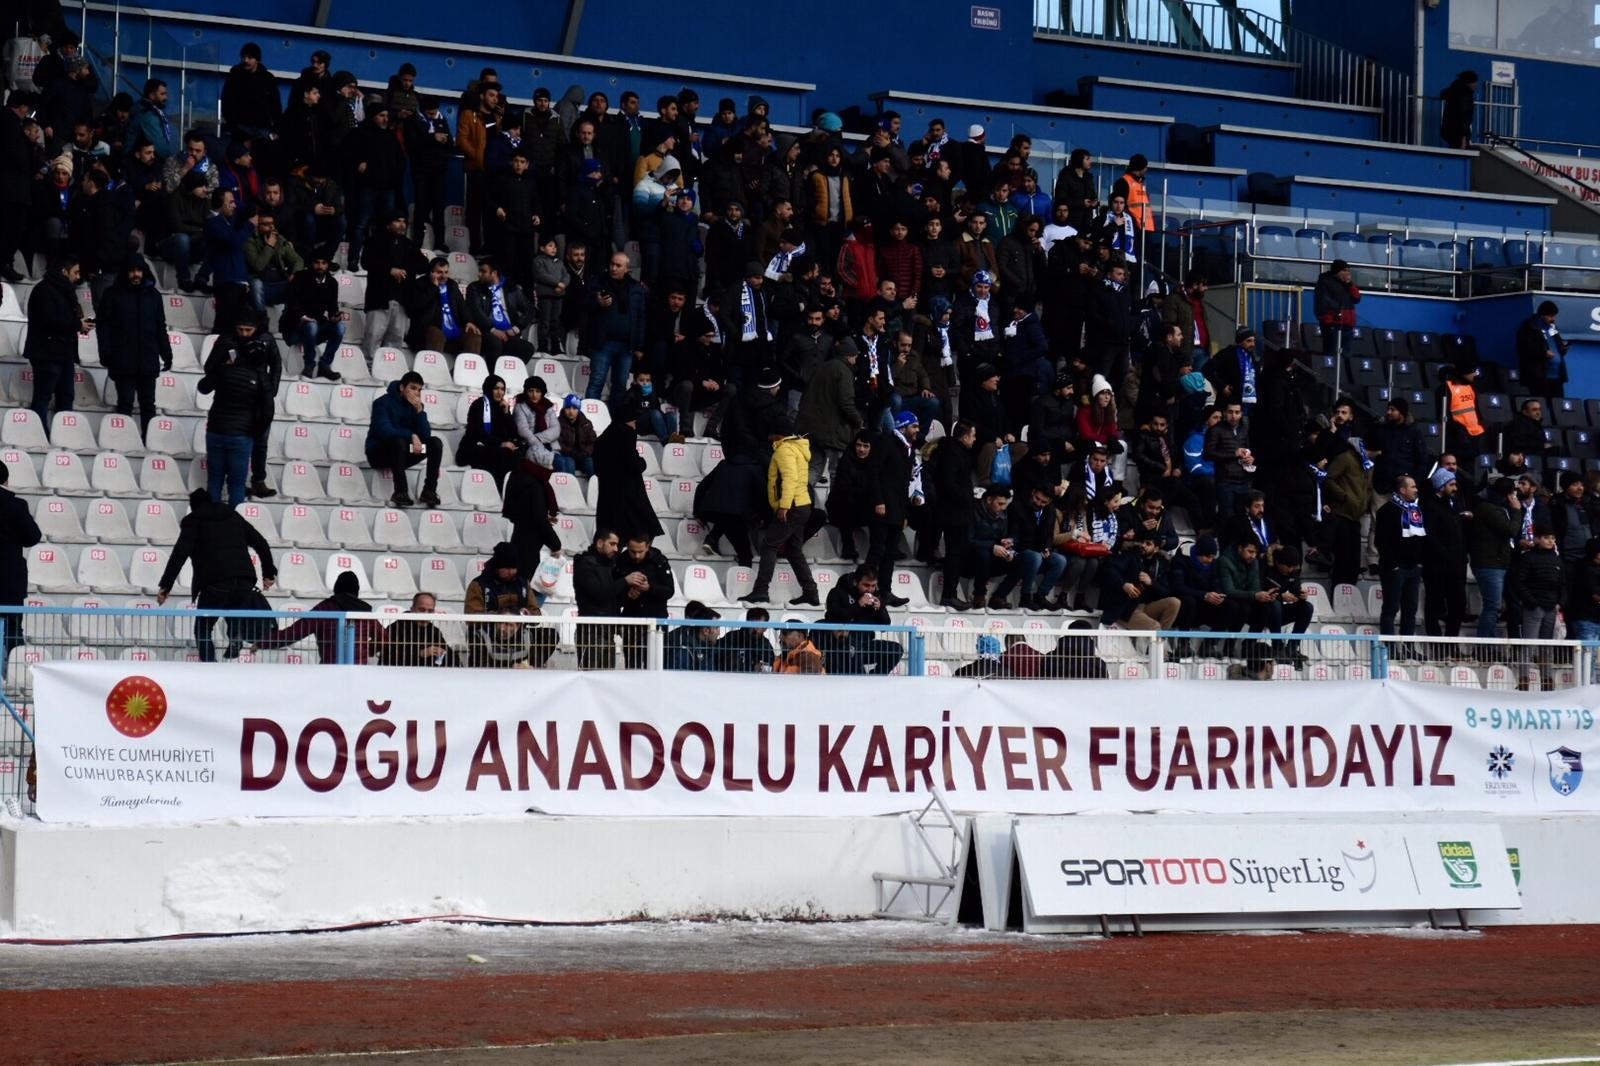 BB Erzurumspor - Galatasaray maçında DKF’19 pankartı